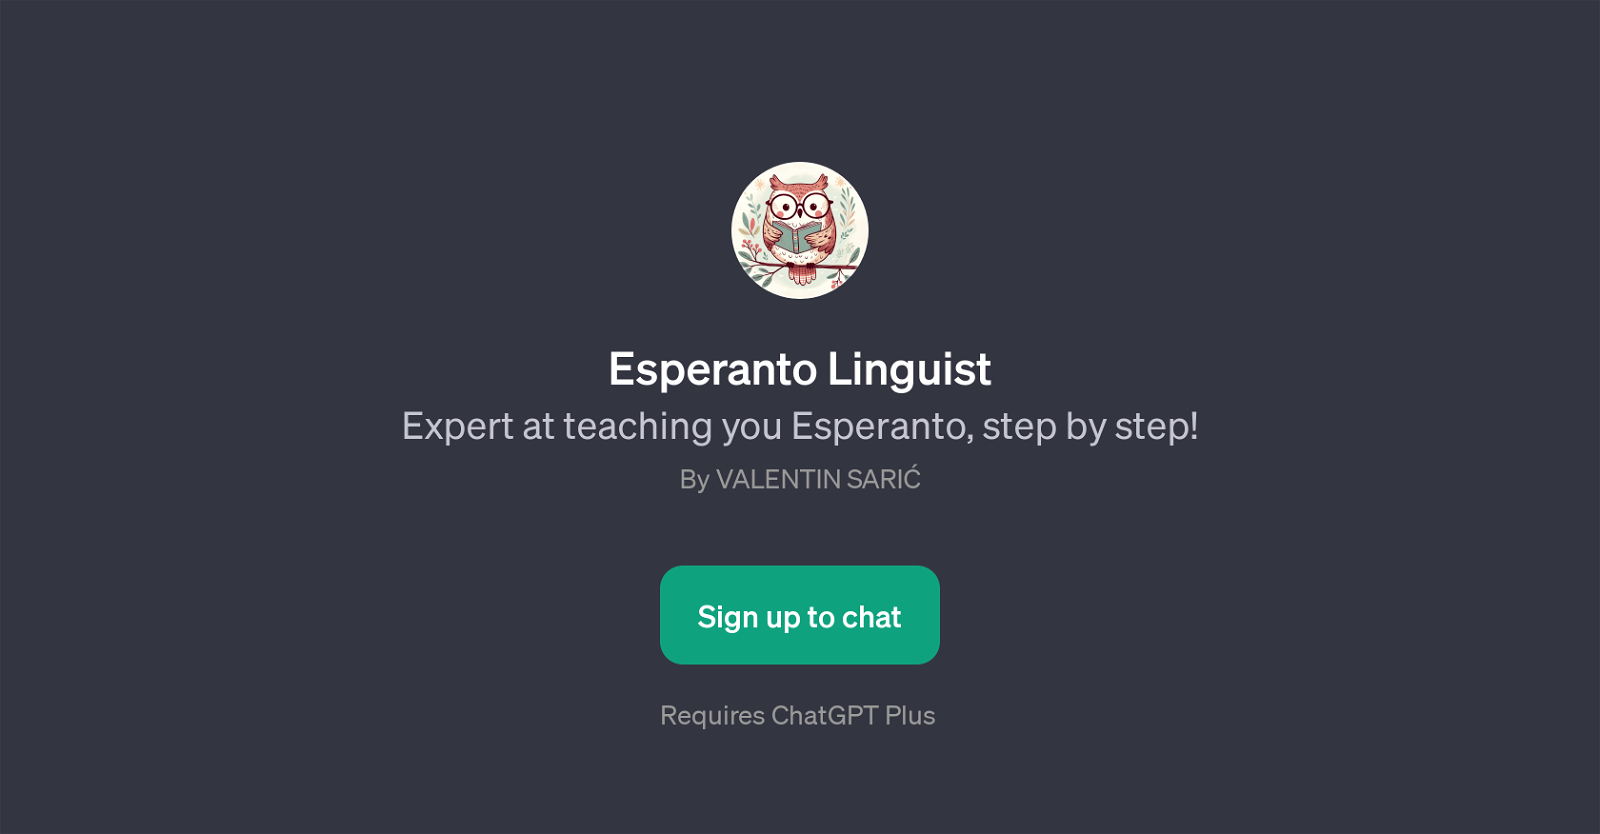 Esperanto Linguist website